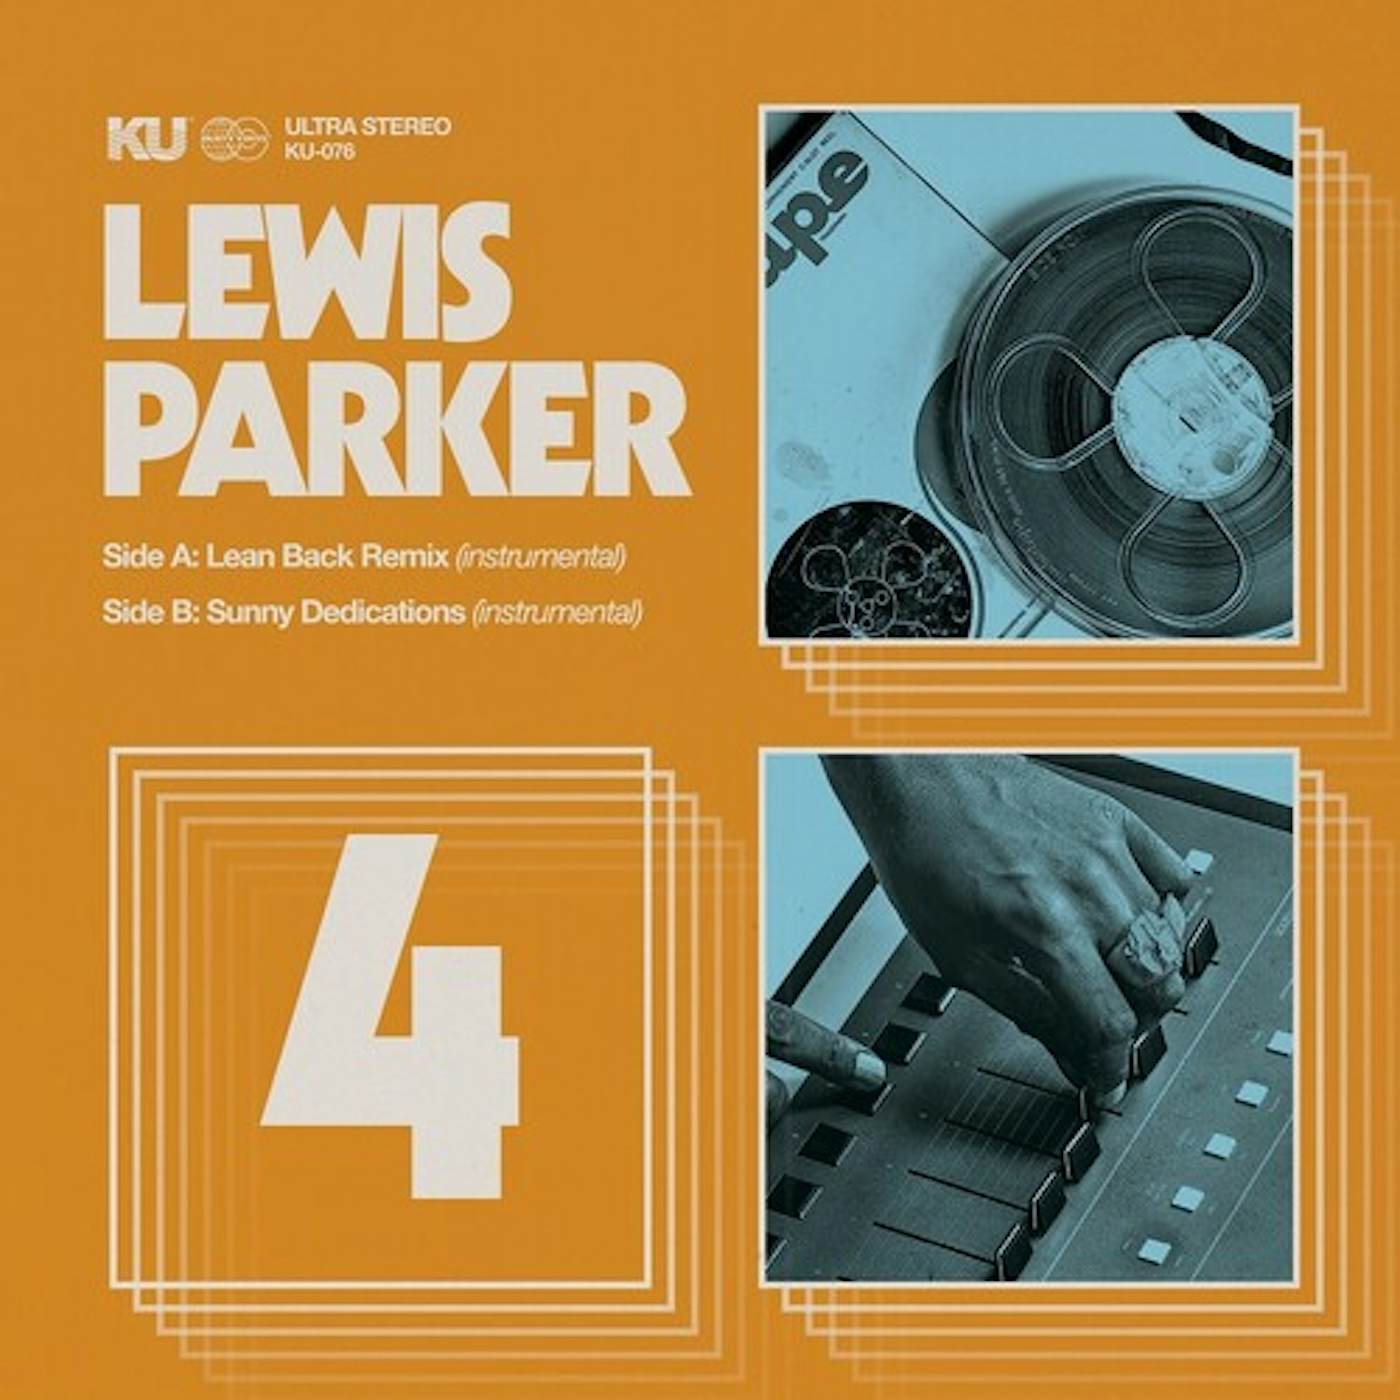 Lewis Parker 45 COLLECTION NO. 4 Vinyl Record